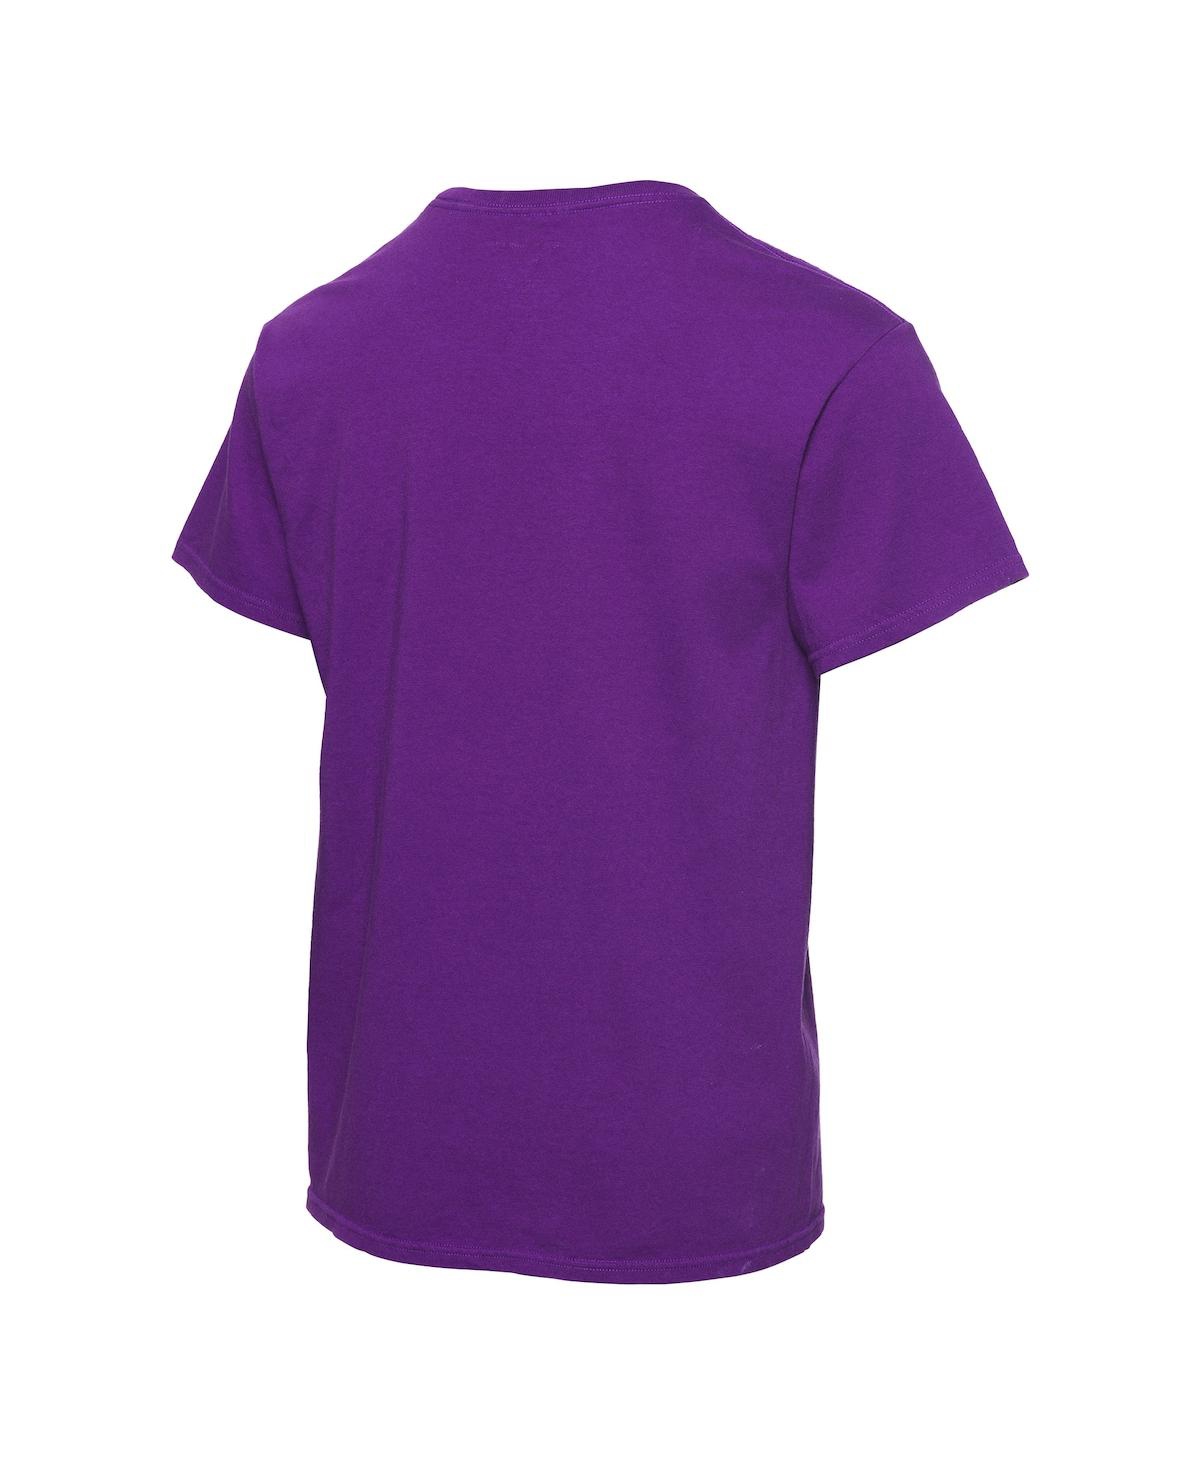 Shop Junk Food Men's  Purple Los Angeles Lakers Nba X Mtv I Want My T-shirt